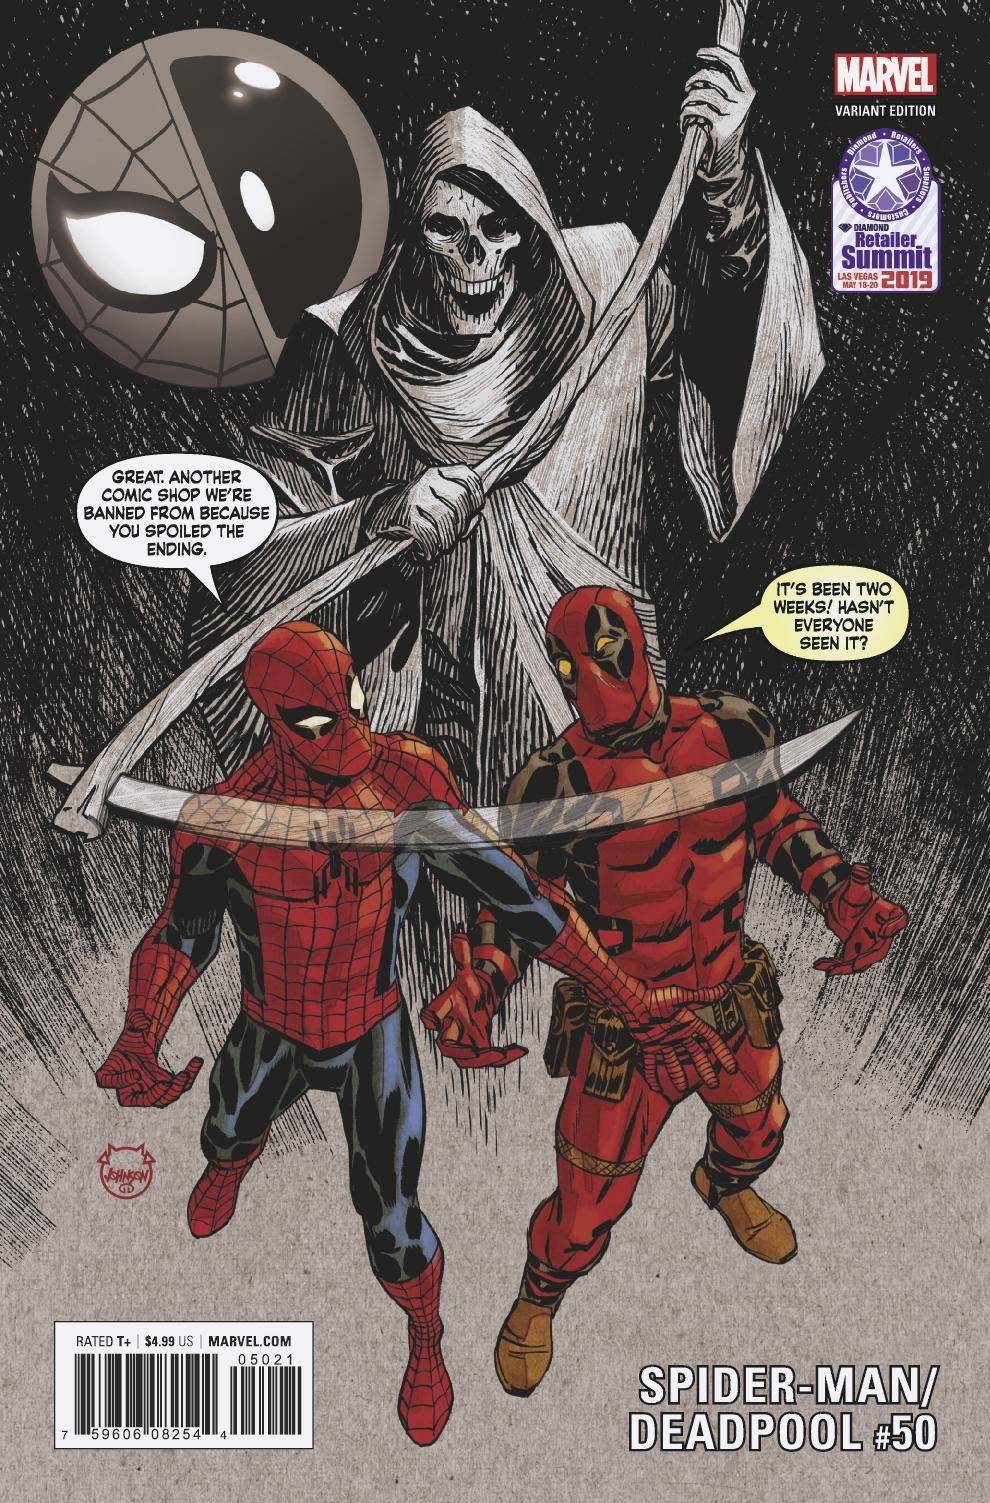 Retailer Summit 2019 Spider-Man Deadpool #50 Johnson Variant